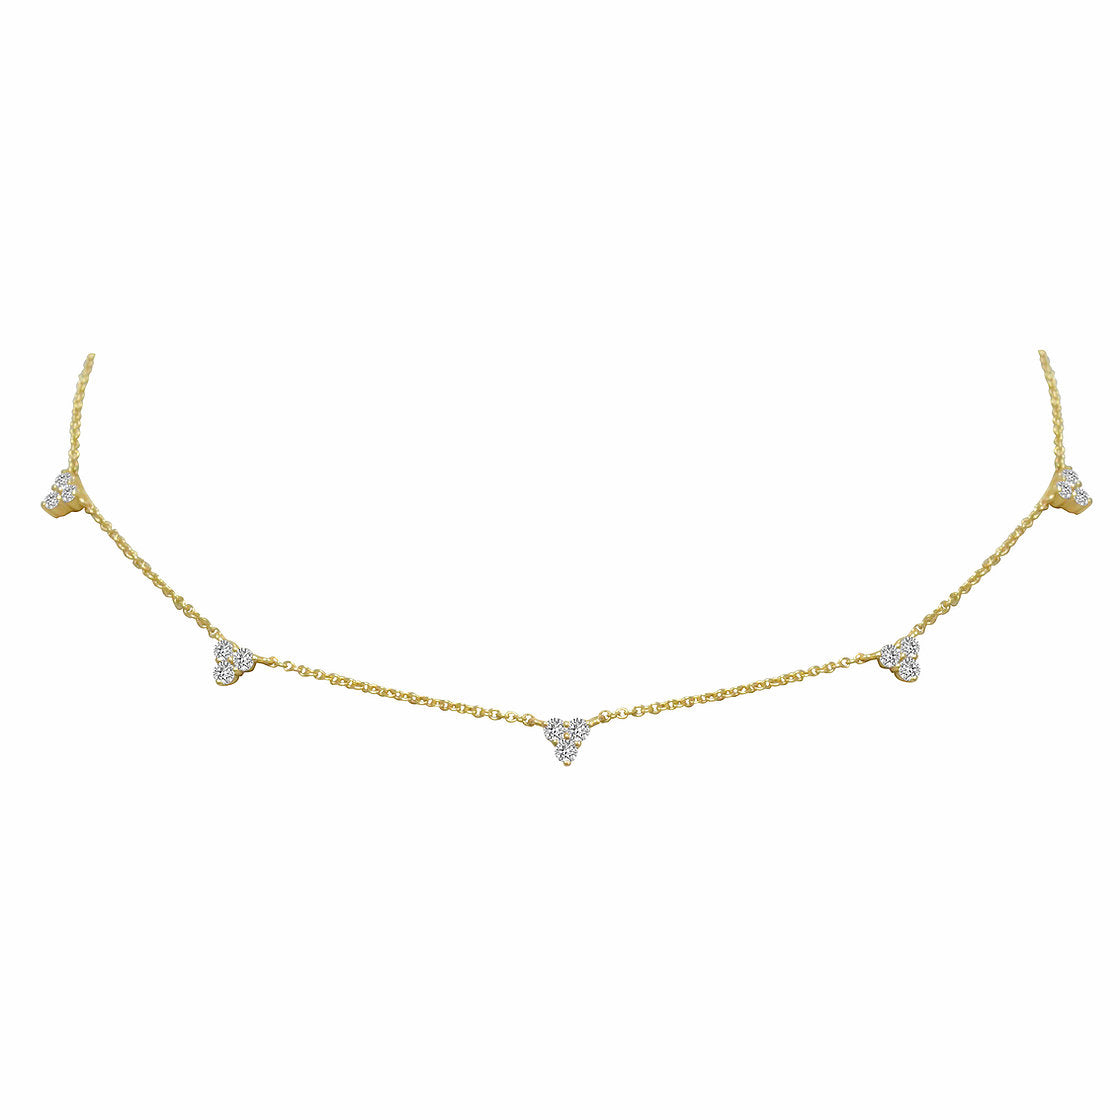 Jane's Essentials - 18K Yellow Gold Lotus Garland Choker Necklace